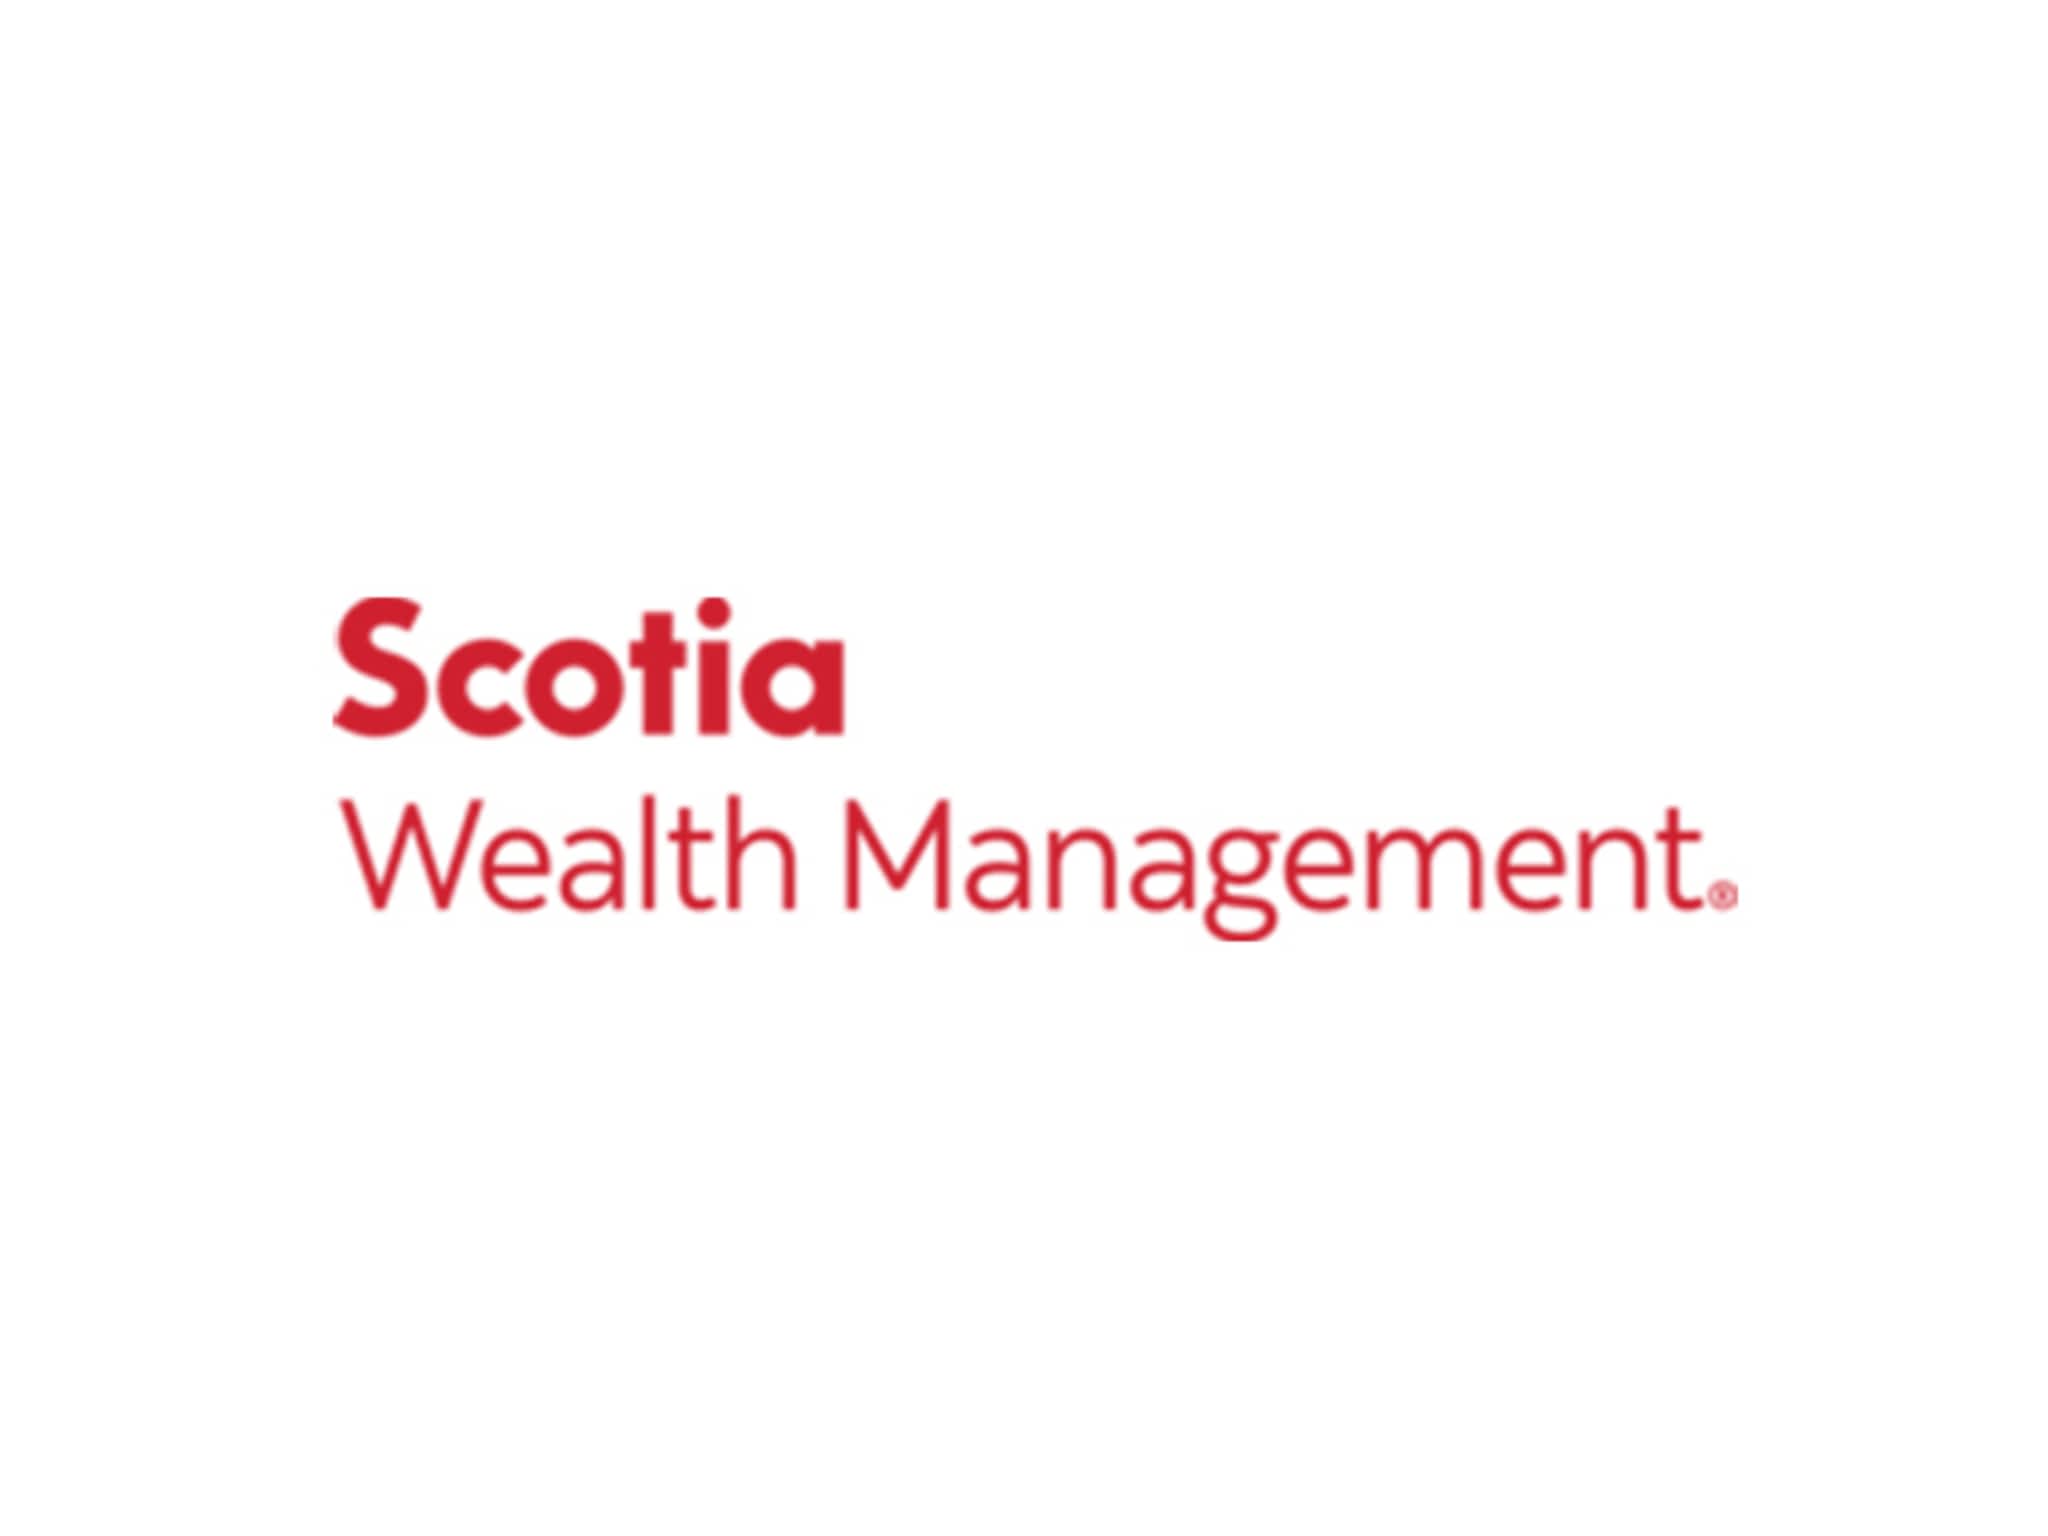 photo Brian Melhoff - The Melhoff Group - ScotiaMcLeod - Scotia Wealth Management